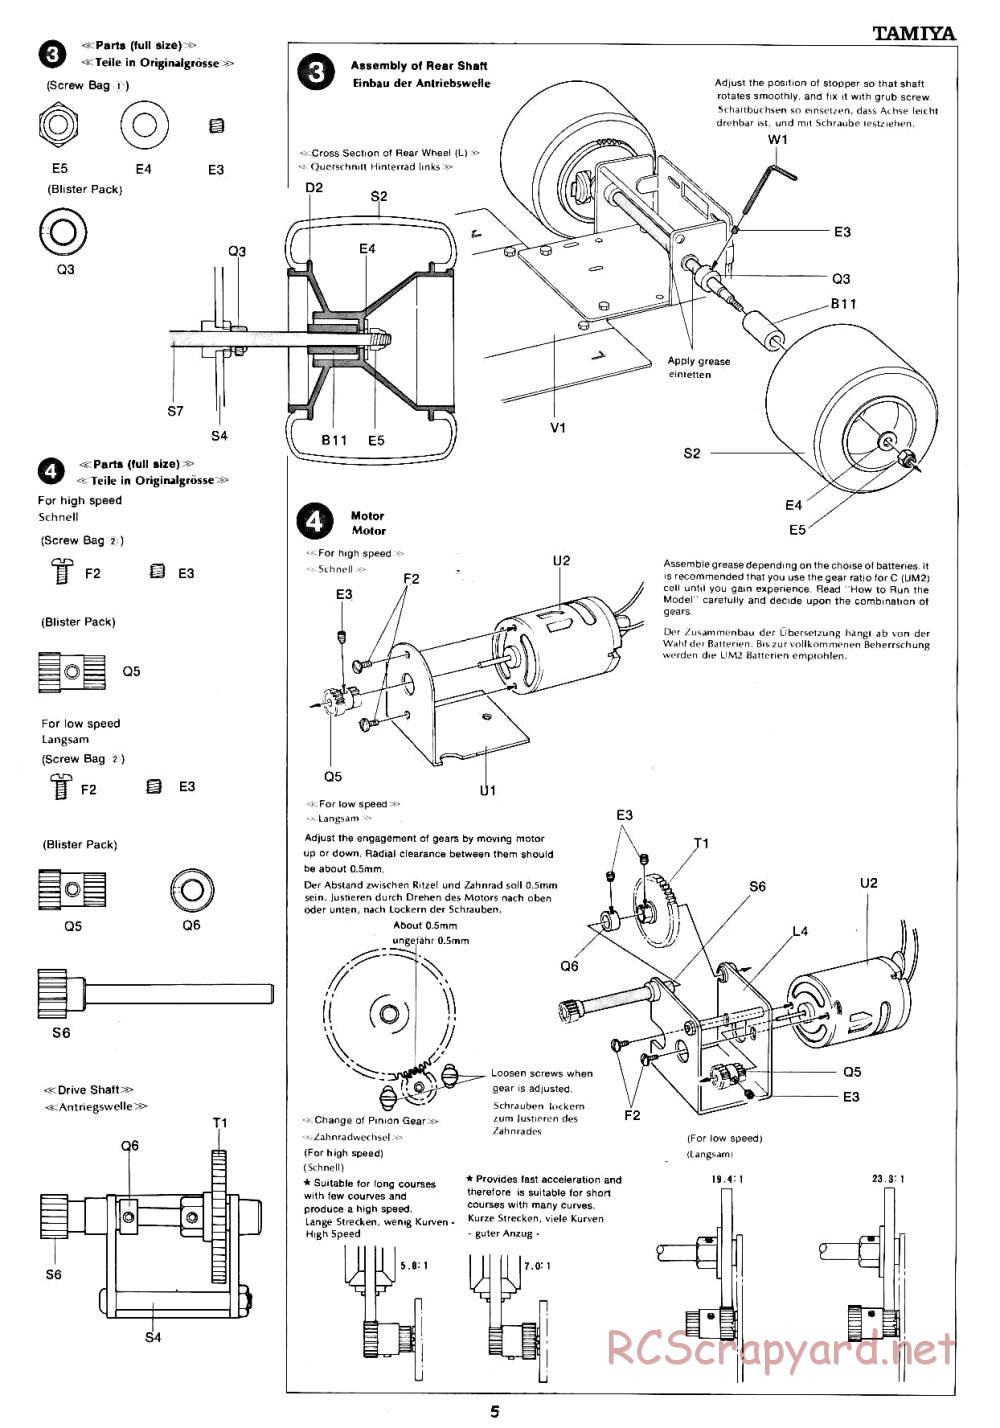 Tamiya - Tyrrell P34 Six Wheeler - 58003 - Manual - Page 5